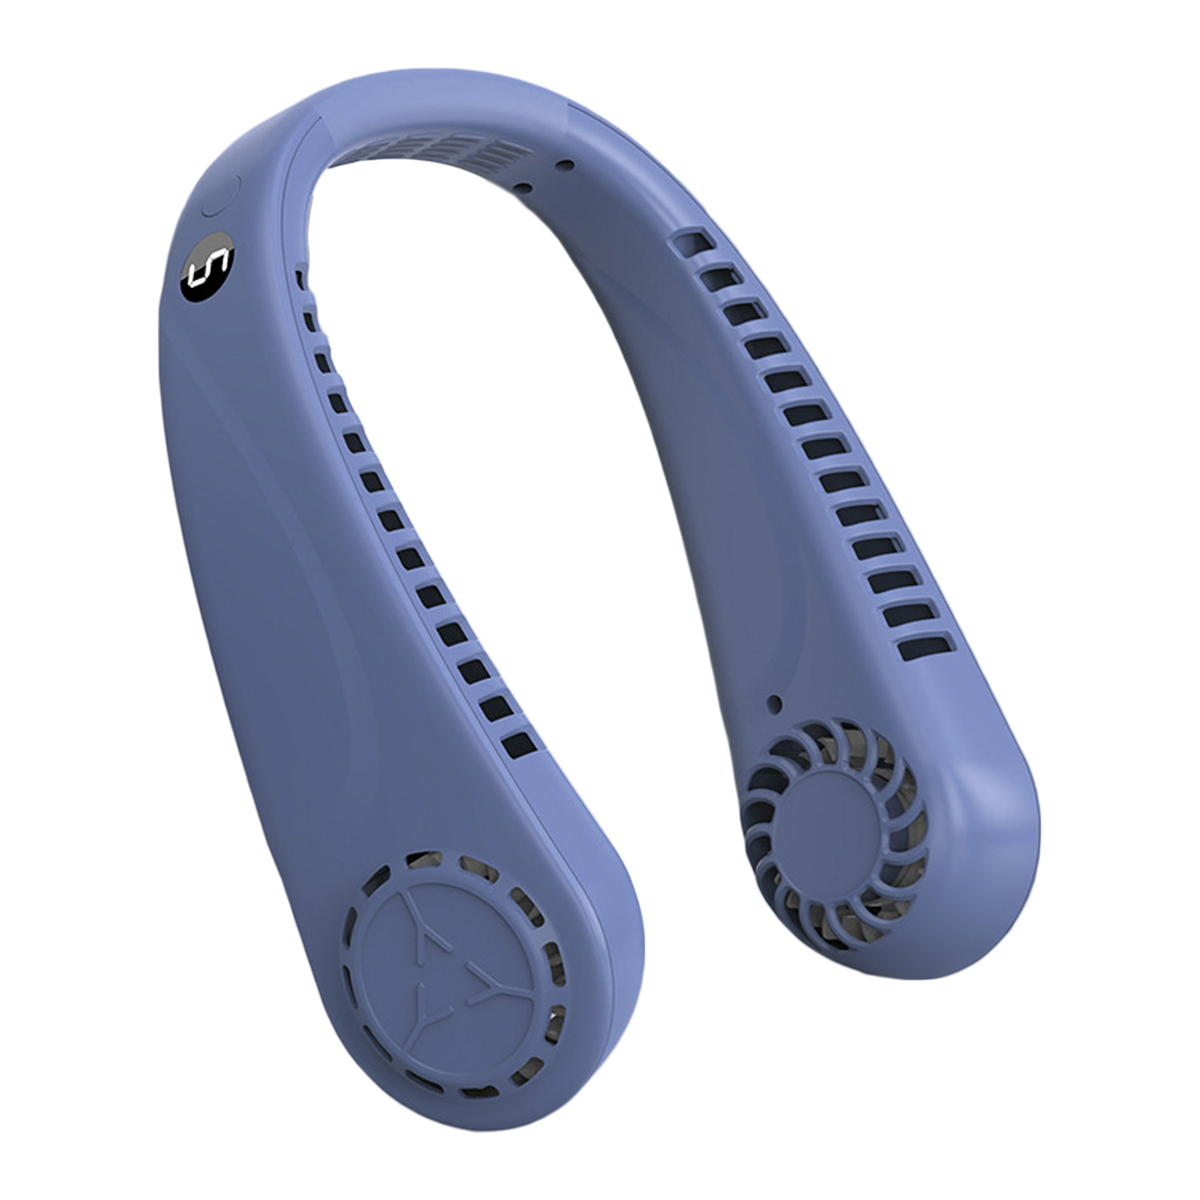 LEIGO Mini Ventilator Halsventilator, LED-Digitalanzeige, Ventilator Ventilator USB-Tragbare blau